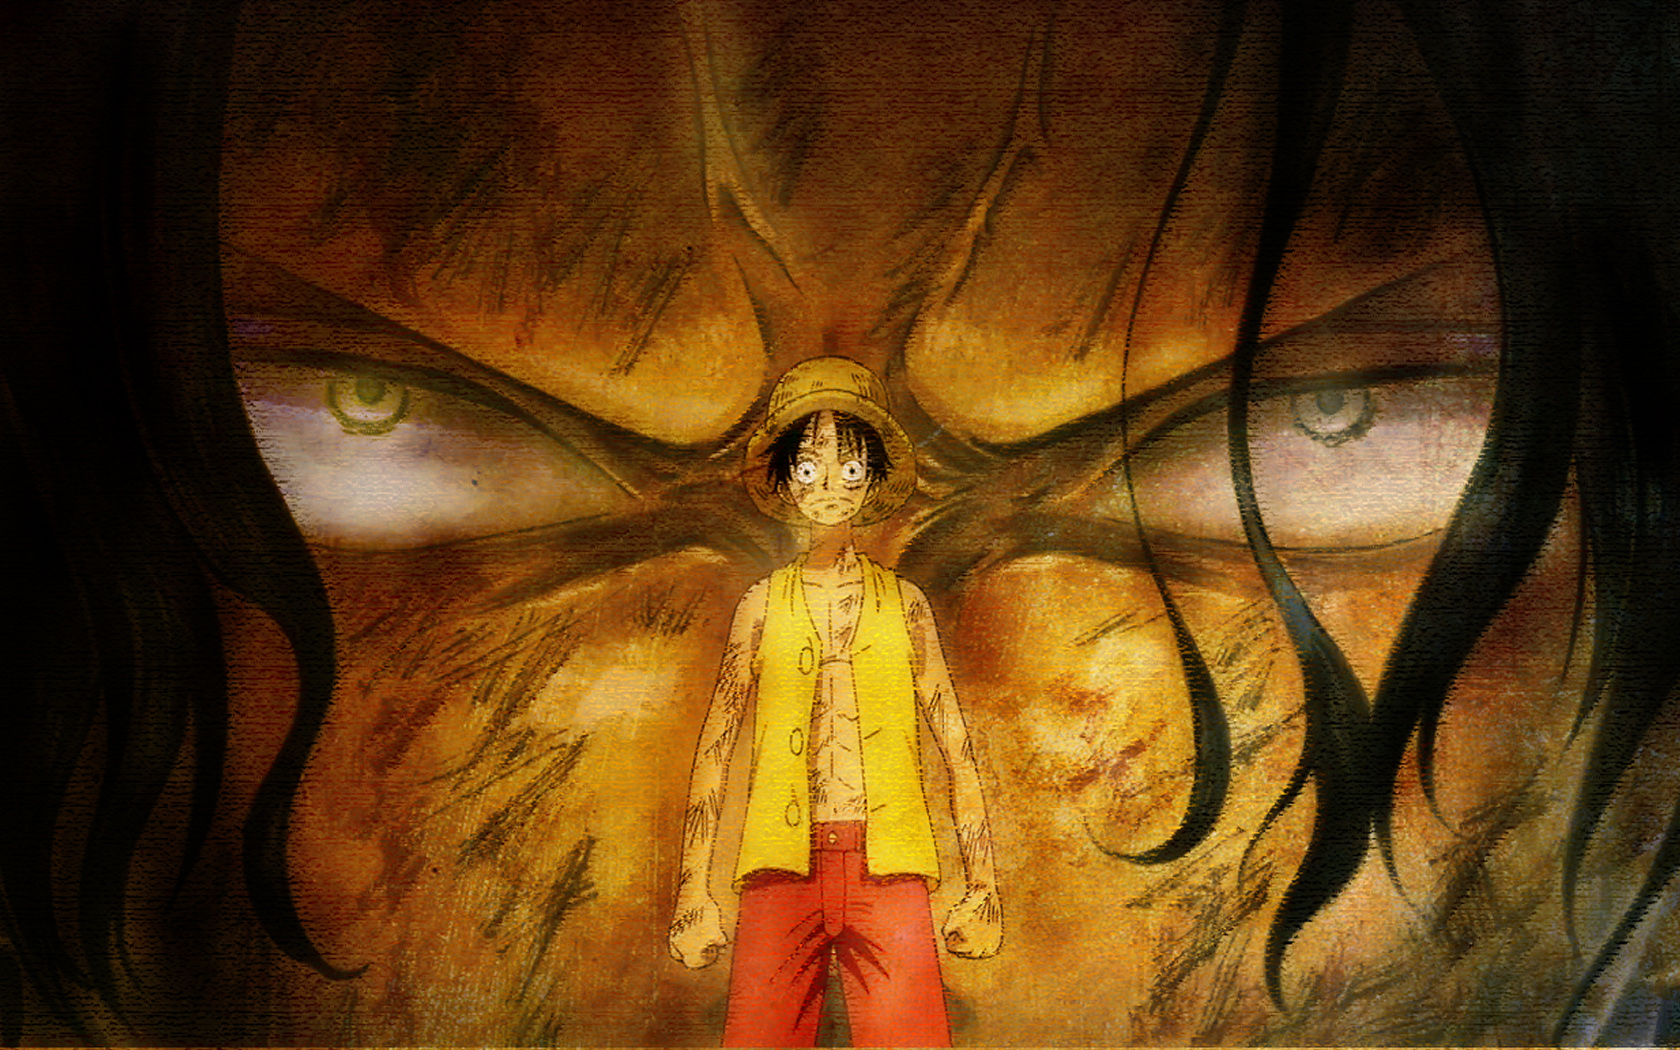 Descarga gratuita de fondo de pantalla para móvil de One Piece, Animado.